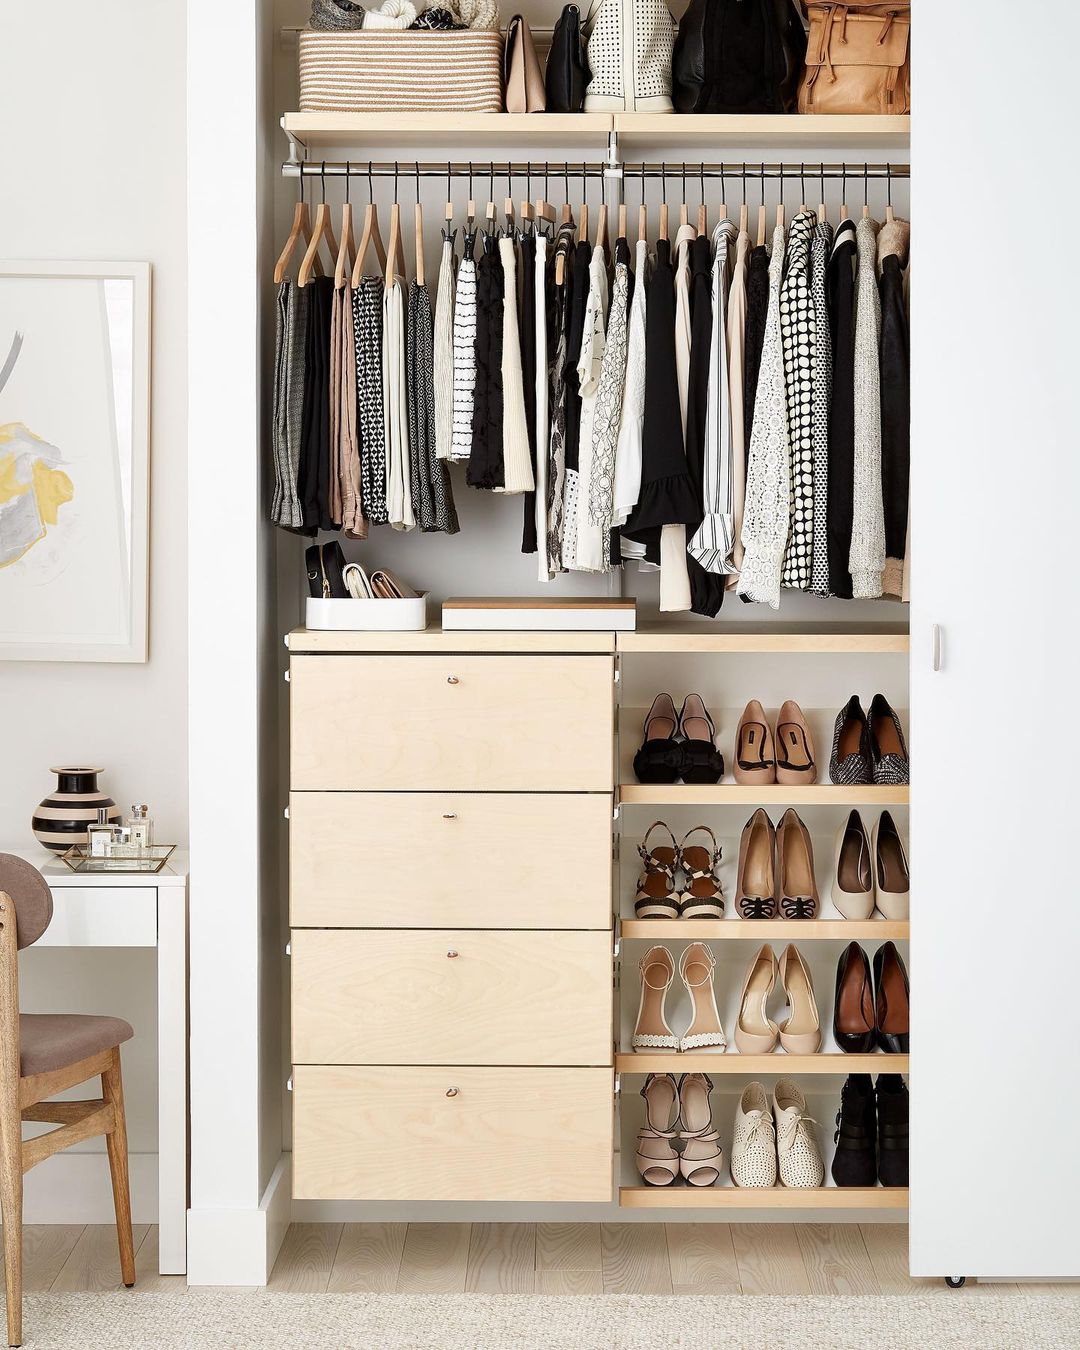 Organized Closet with a Shoe Rack.